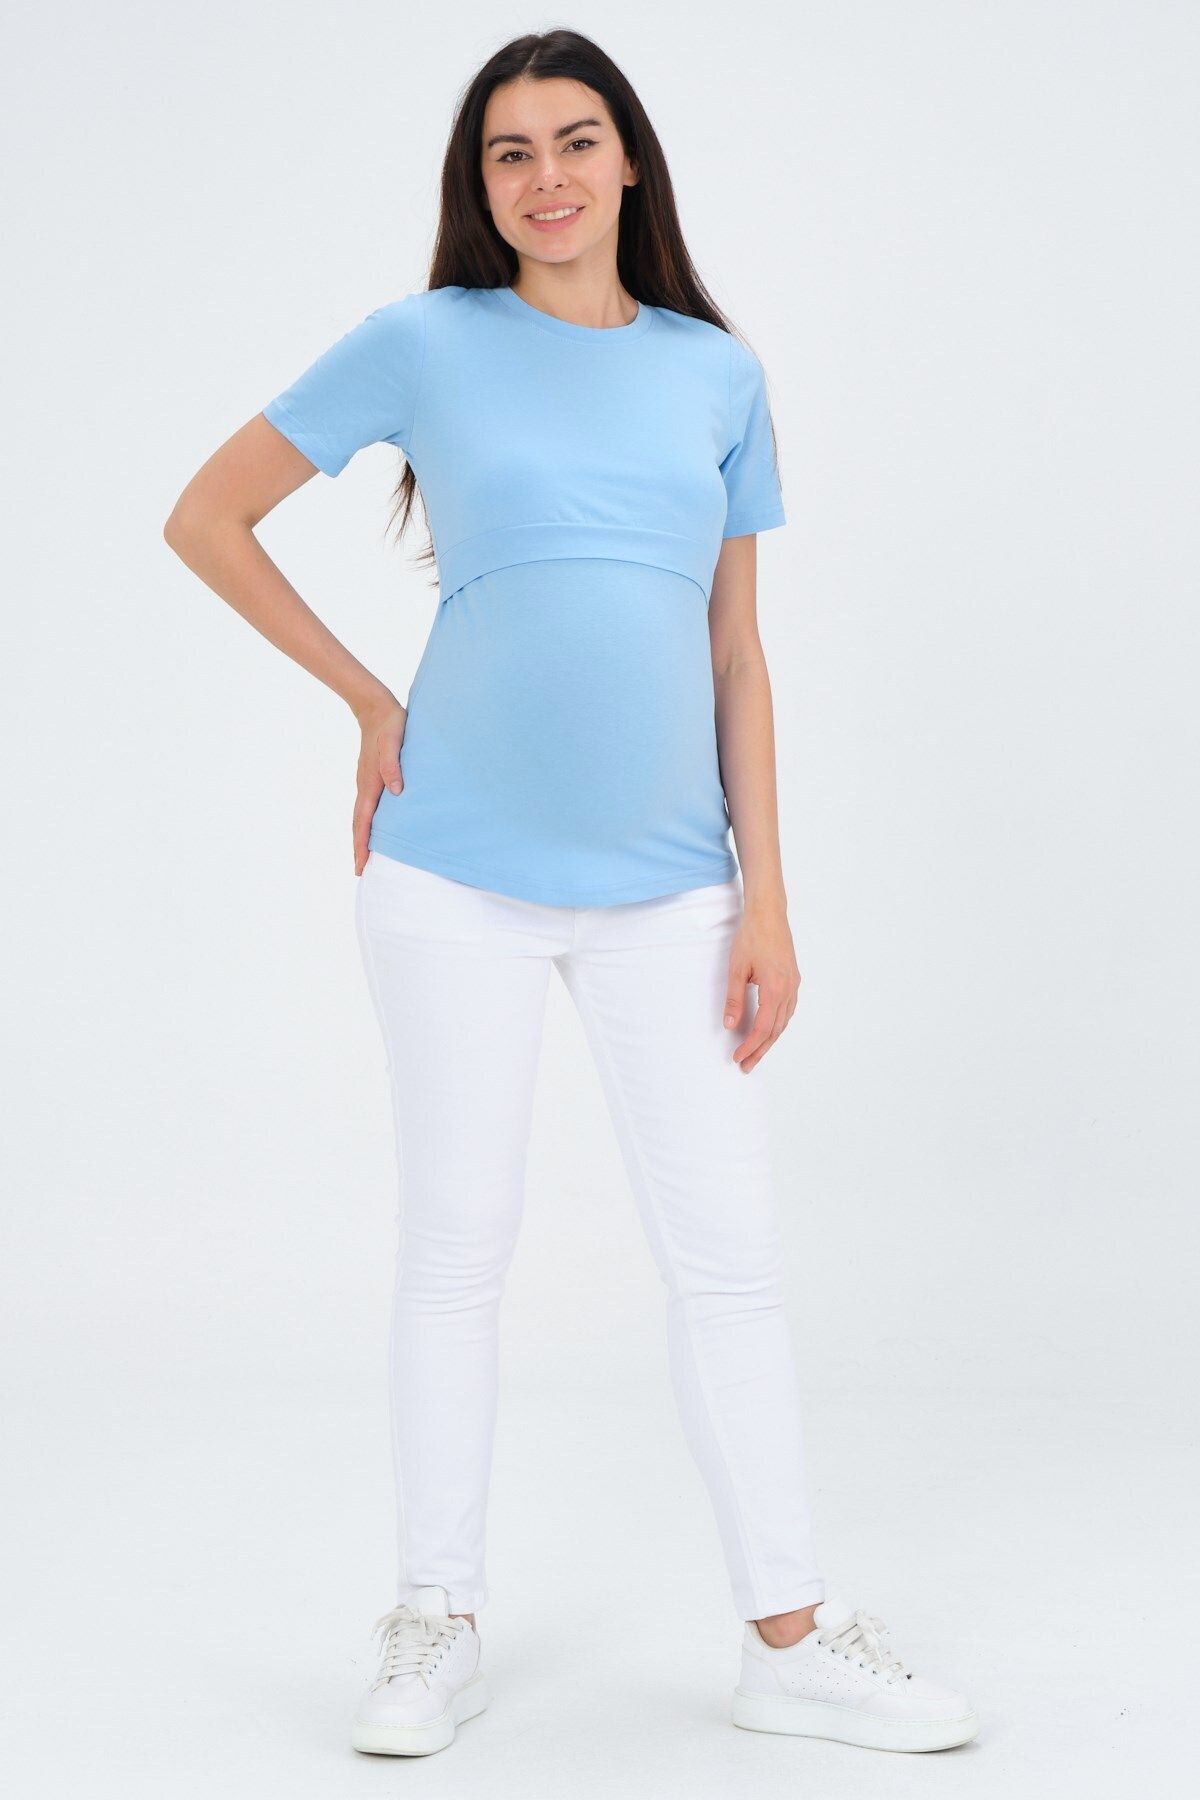 BUSA Hamile Emzirme Detaylı Kısa Kollu T-shirt Mavi 7420